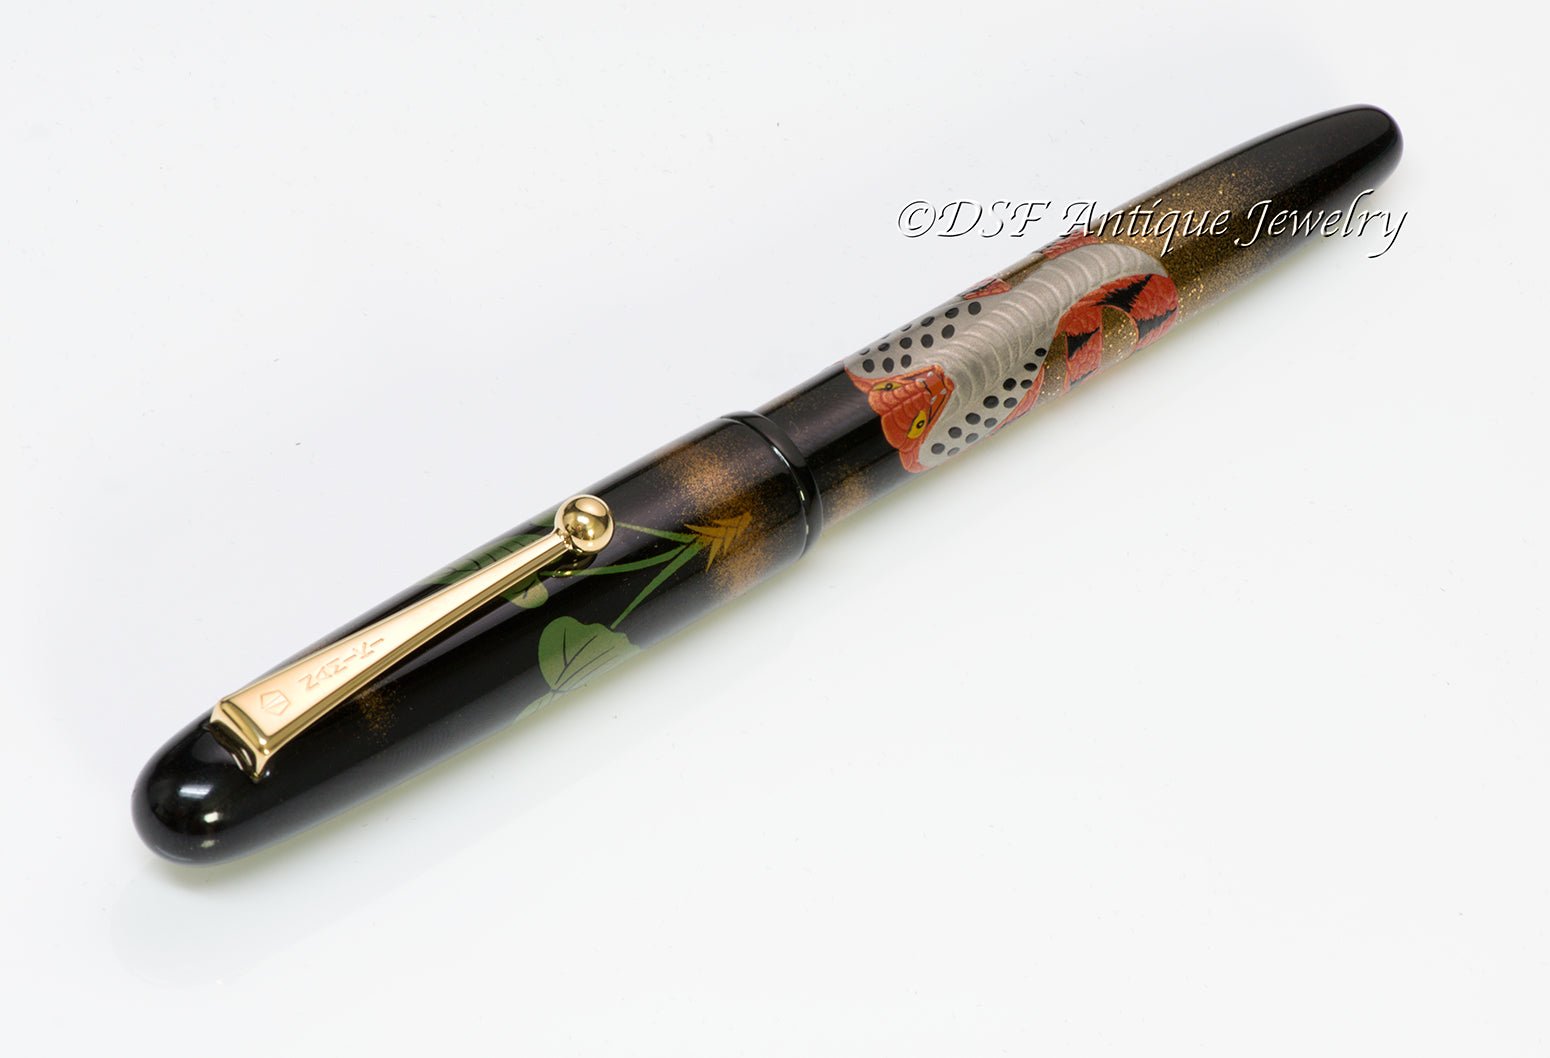 Namiki Yukari King Cobra Limited Edition Fountain Pen